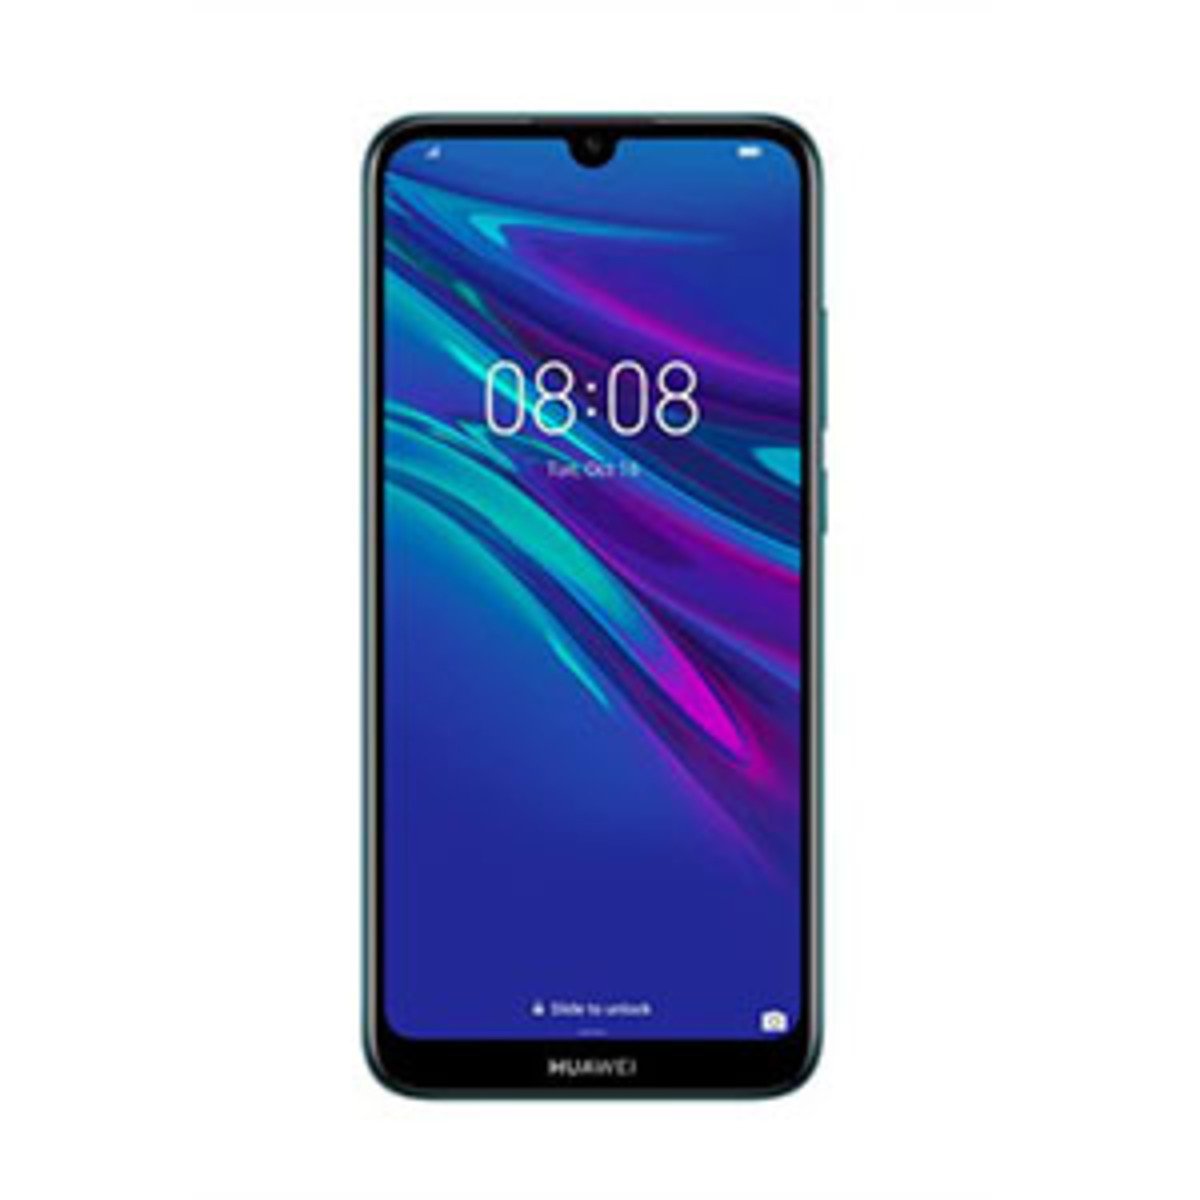 Huawei Y6 Prime 2019 32GB Blue